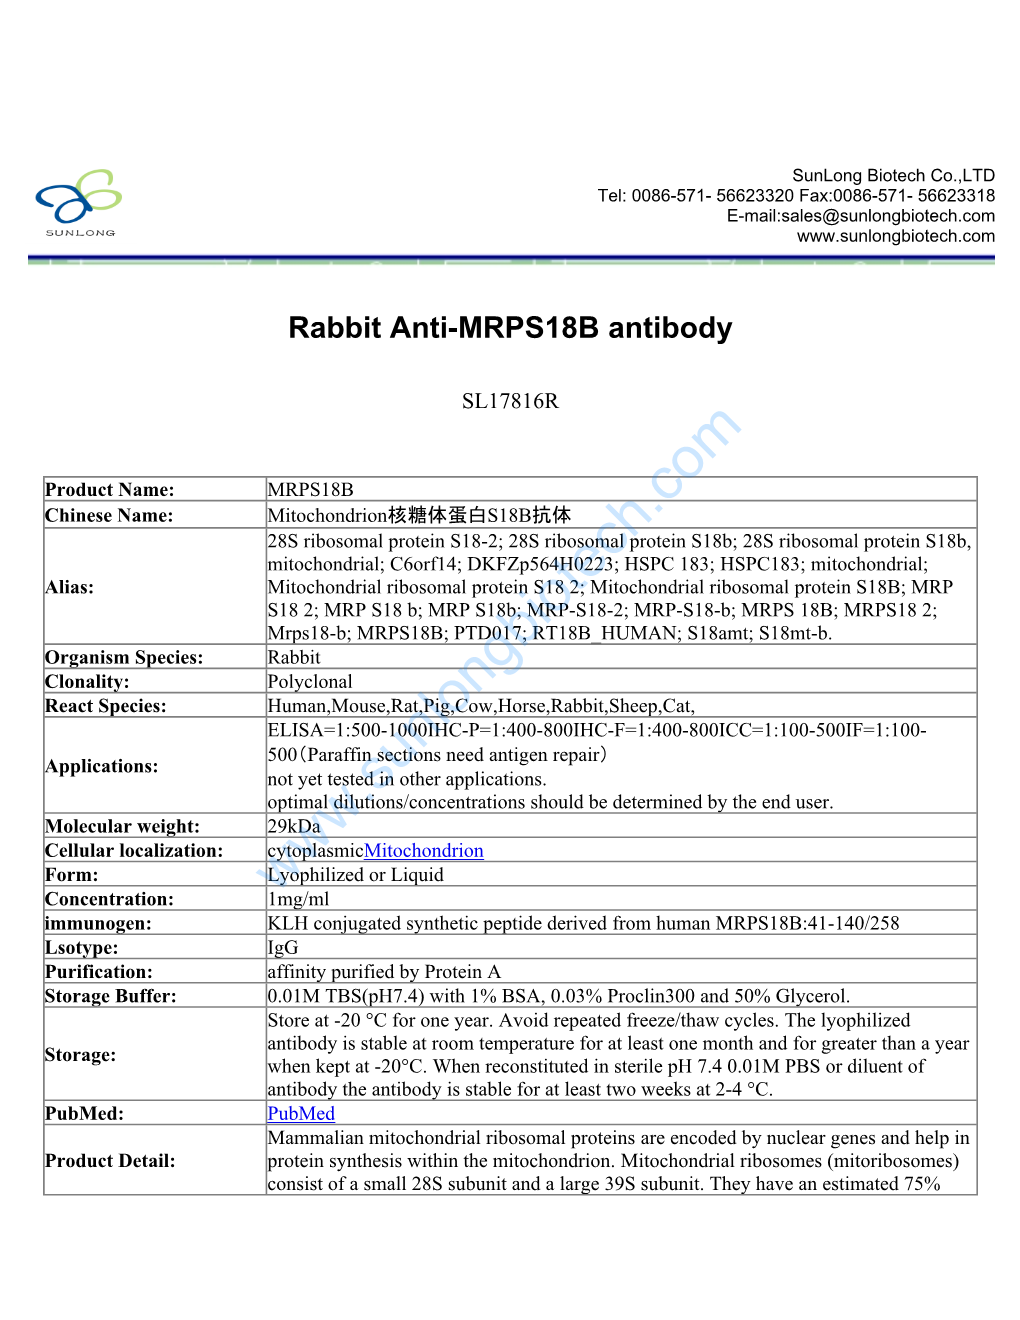 Rabbit Anti-MRPS18B Antibody-SL17816R